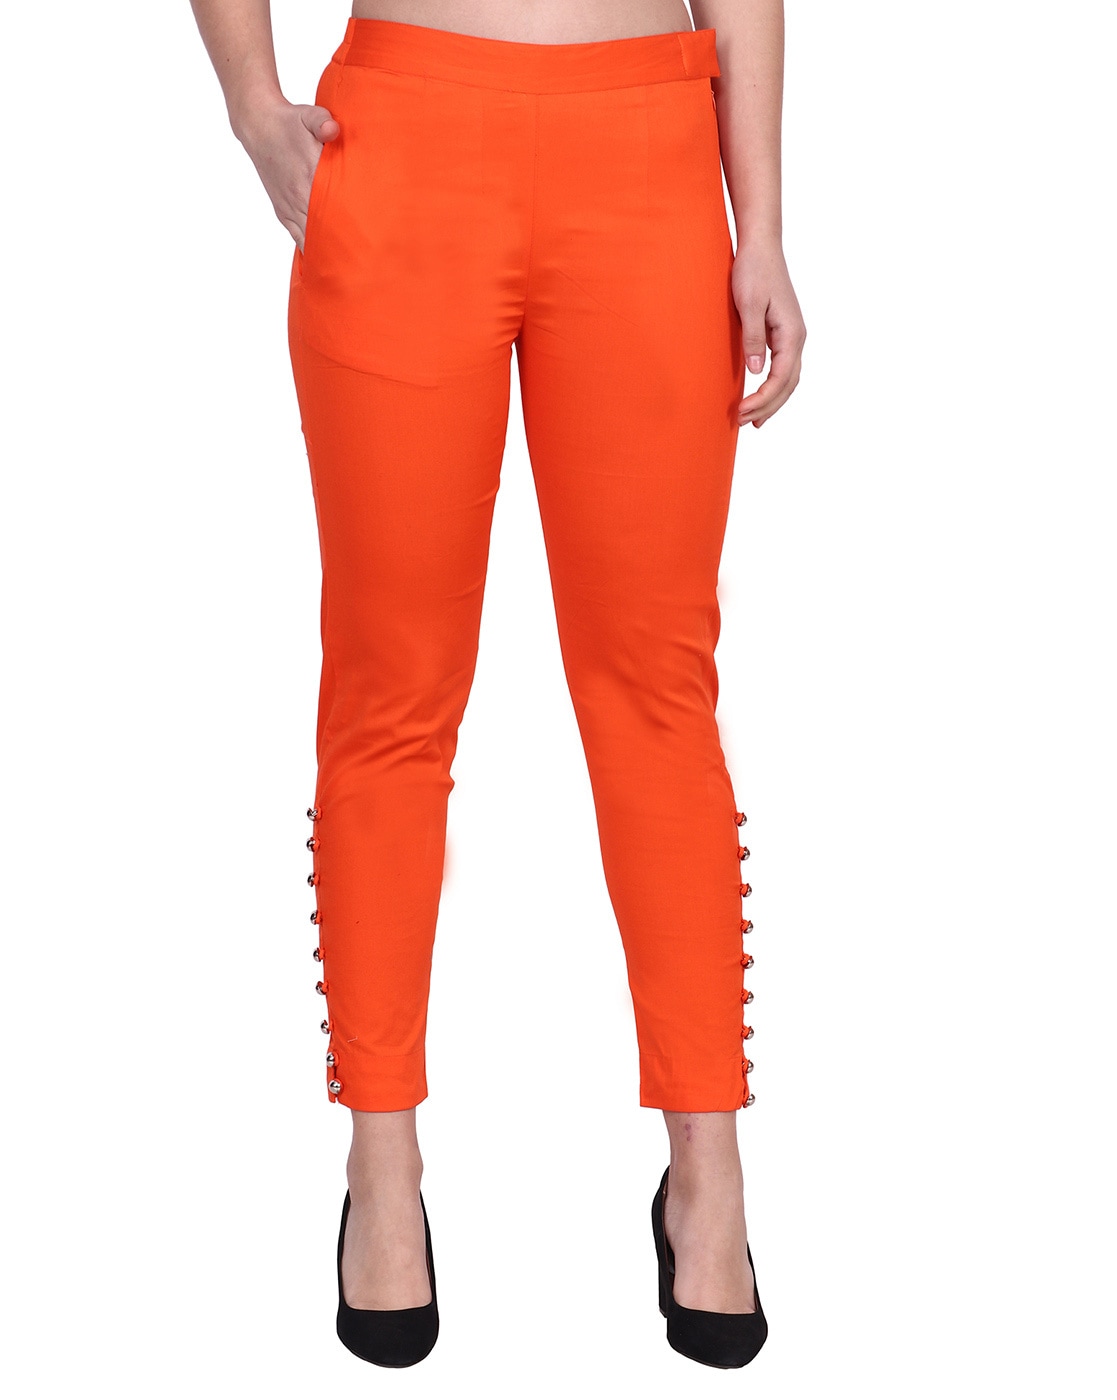 Buy Orange Trousers  Pants for Women by Jaipur Kurti Online  Ajiocom